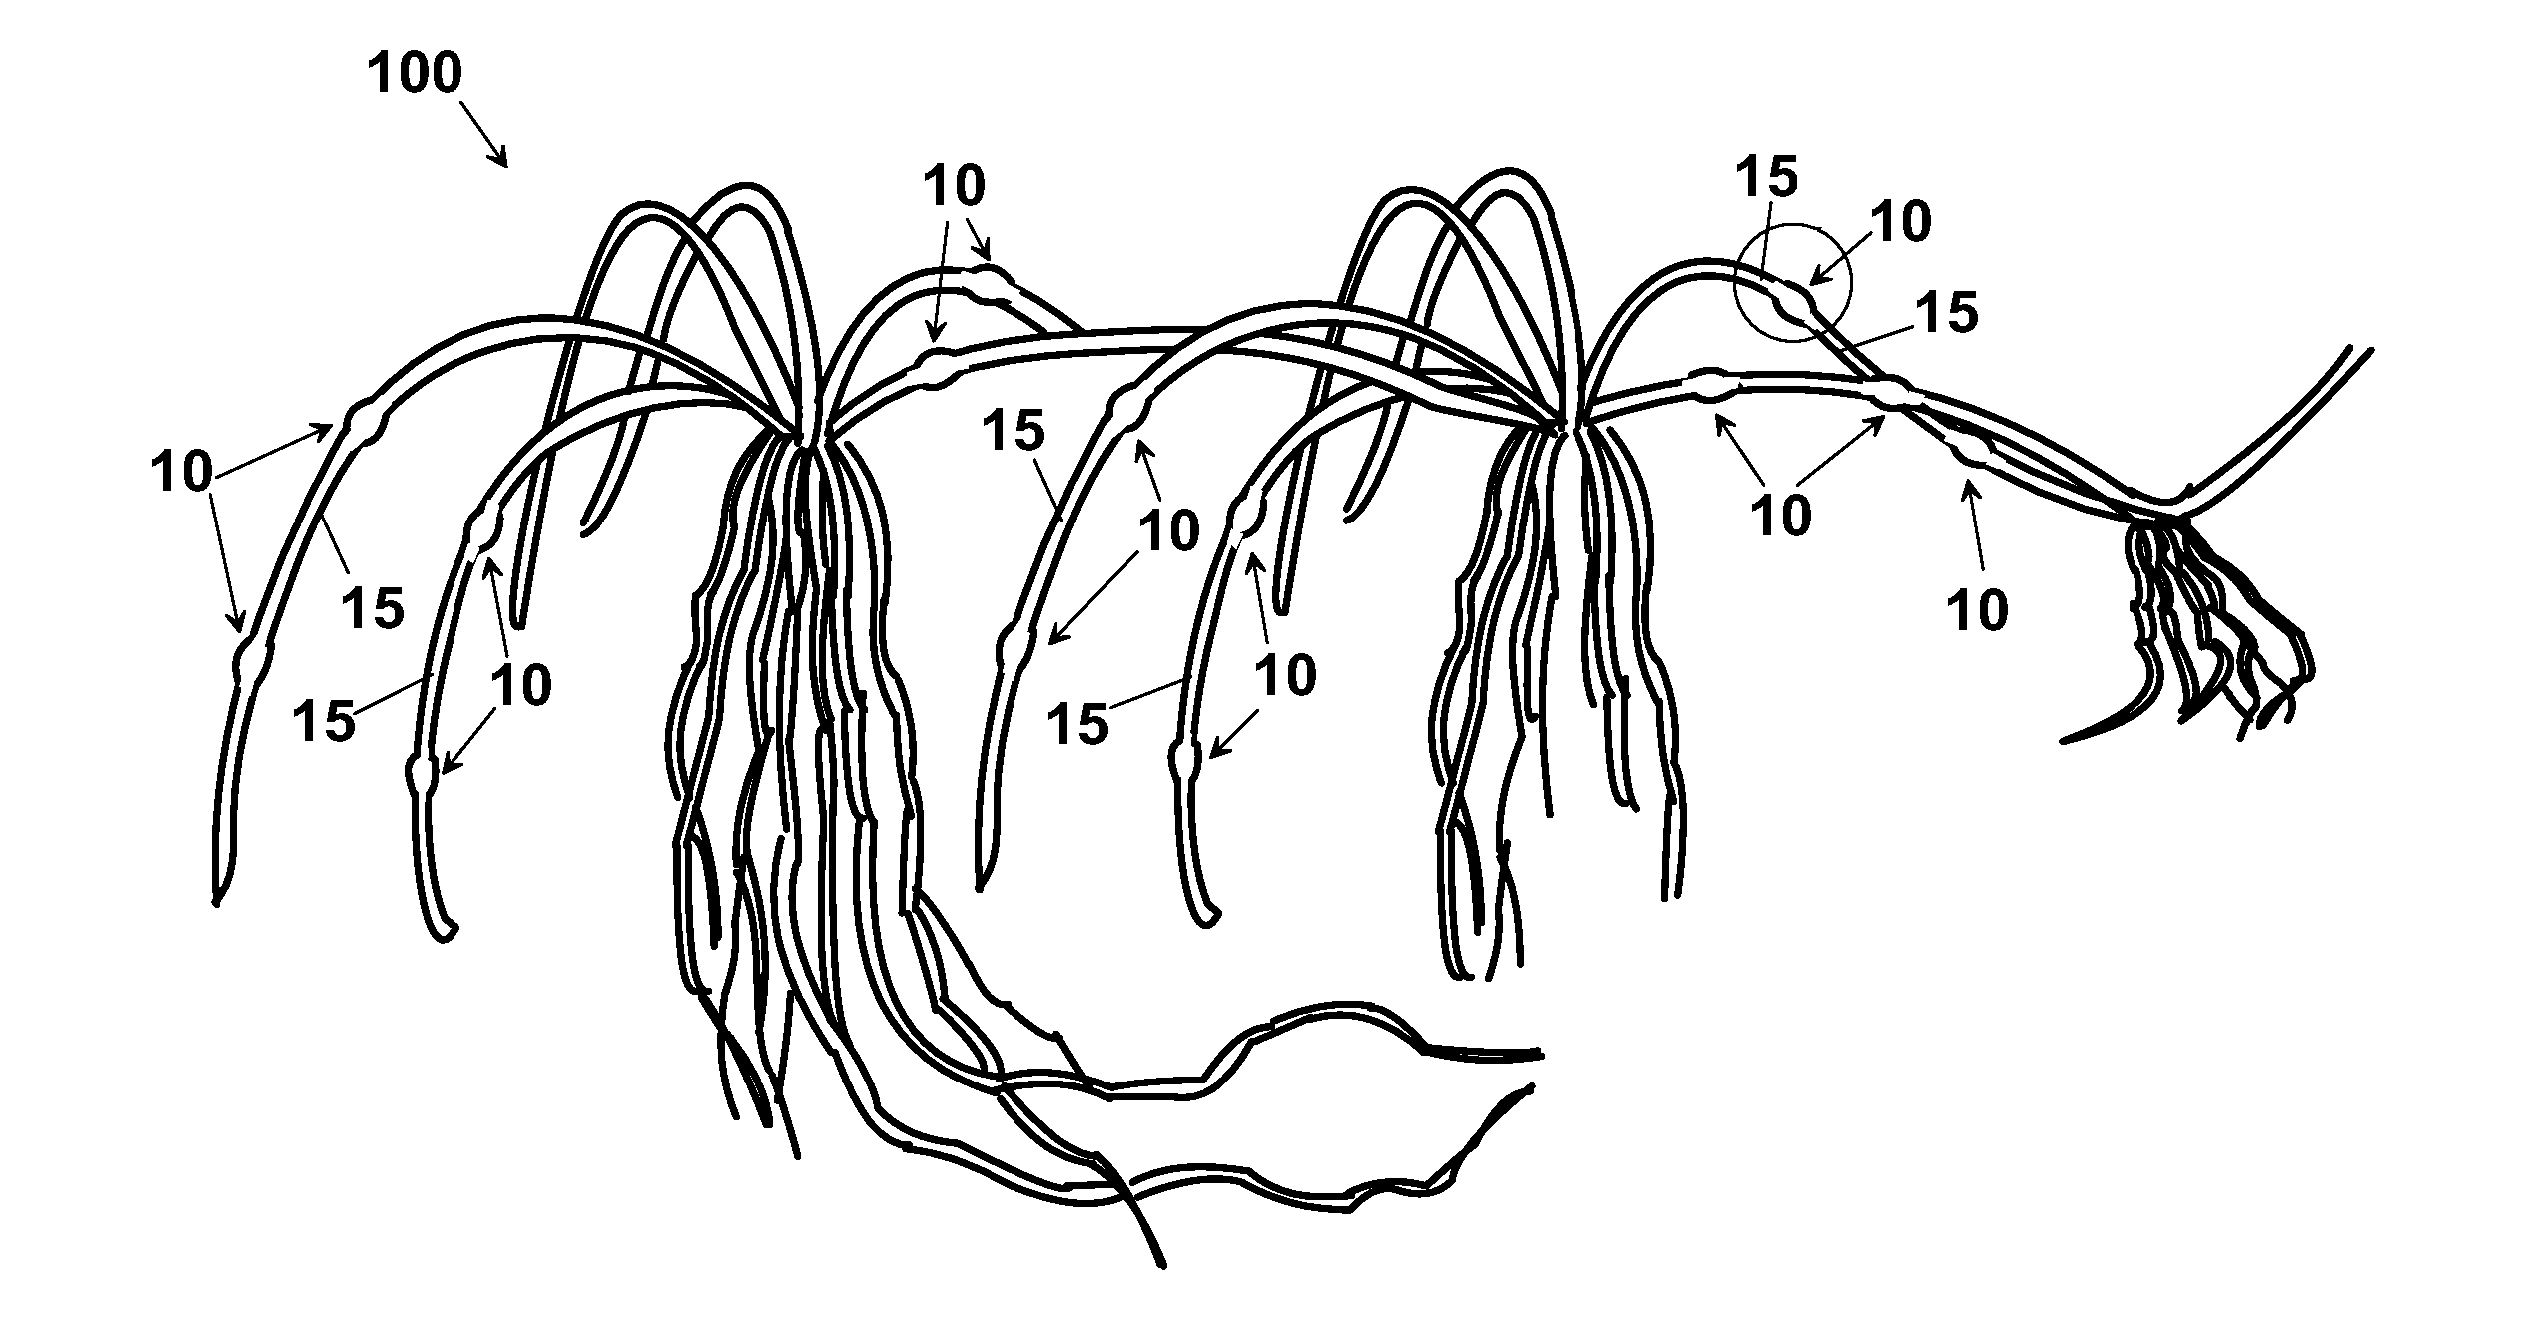 Method for making a turf of stoloniferous or rhizomatous plant species